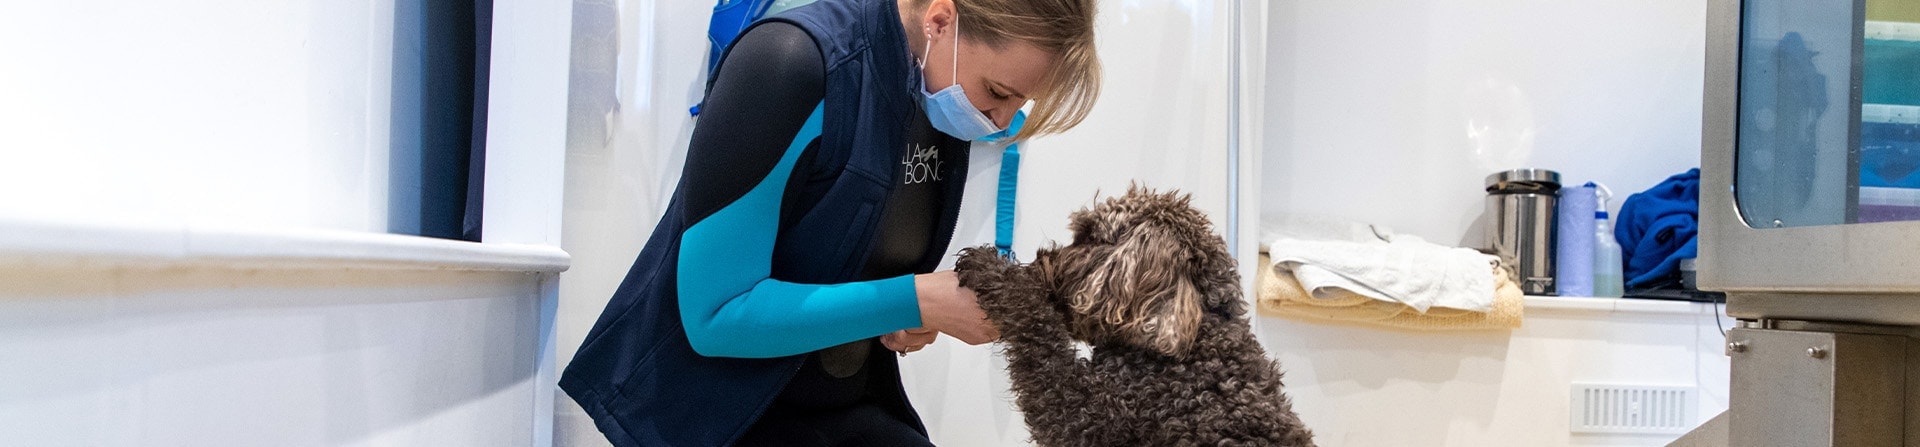 Dog Physiotherapy | Dog Rehabilitation at Oak Barn Vets